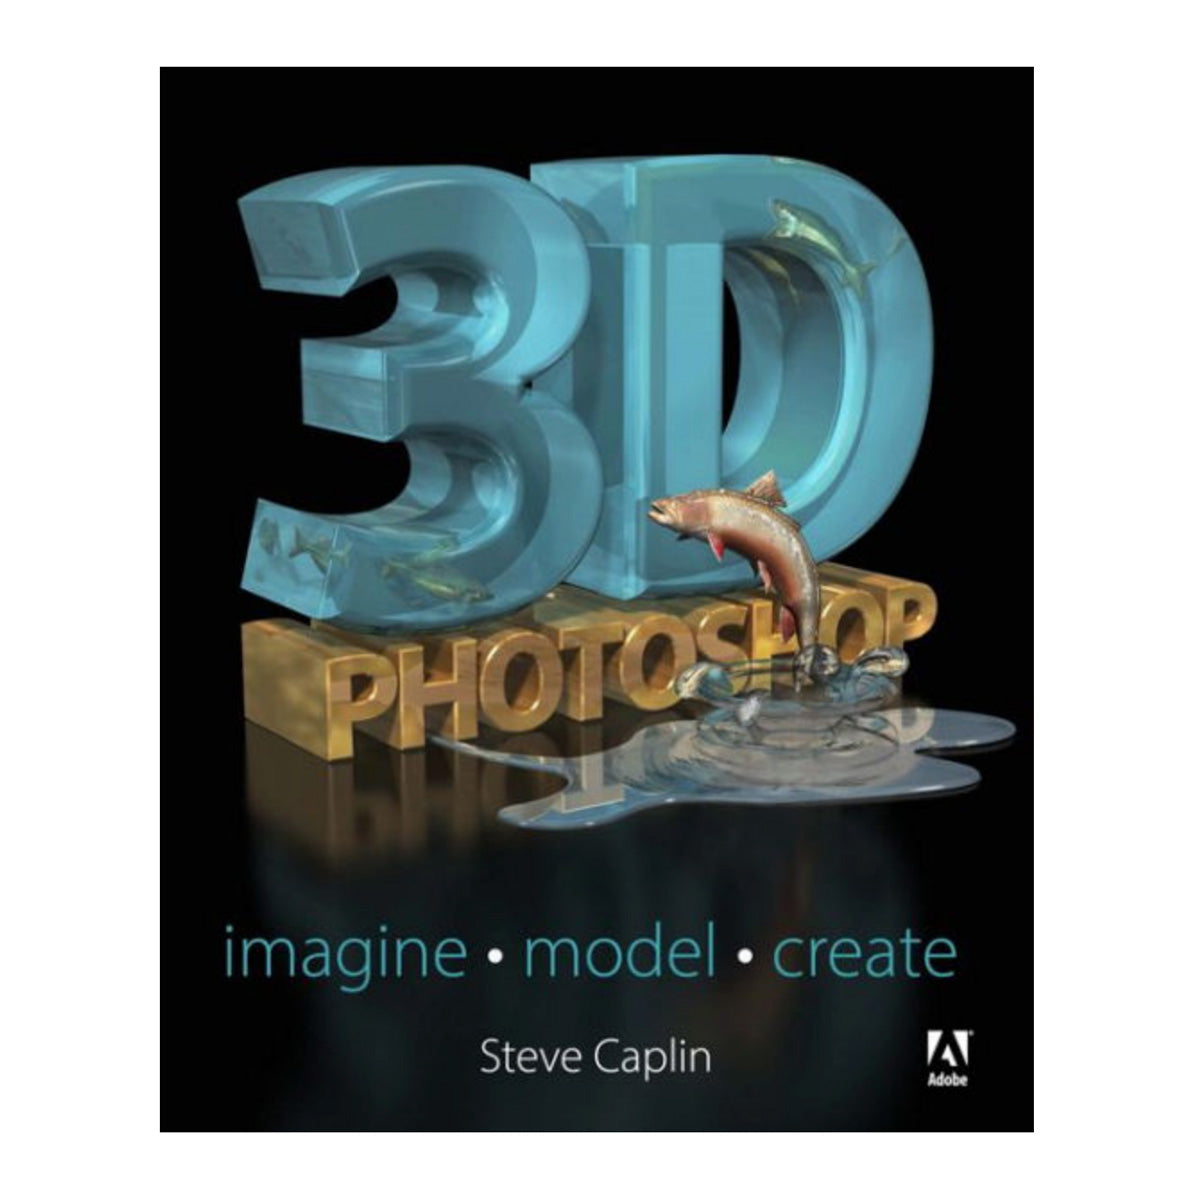 Book: 3D Photoshop, Steve Saplin